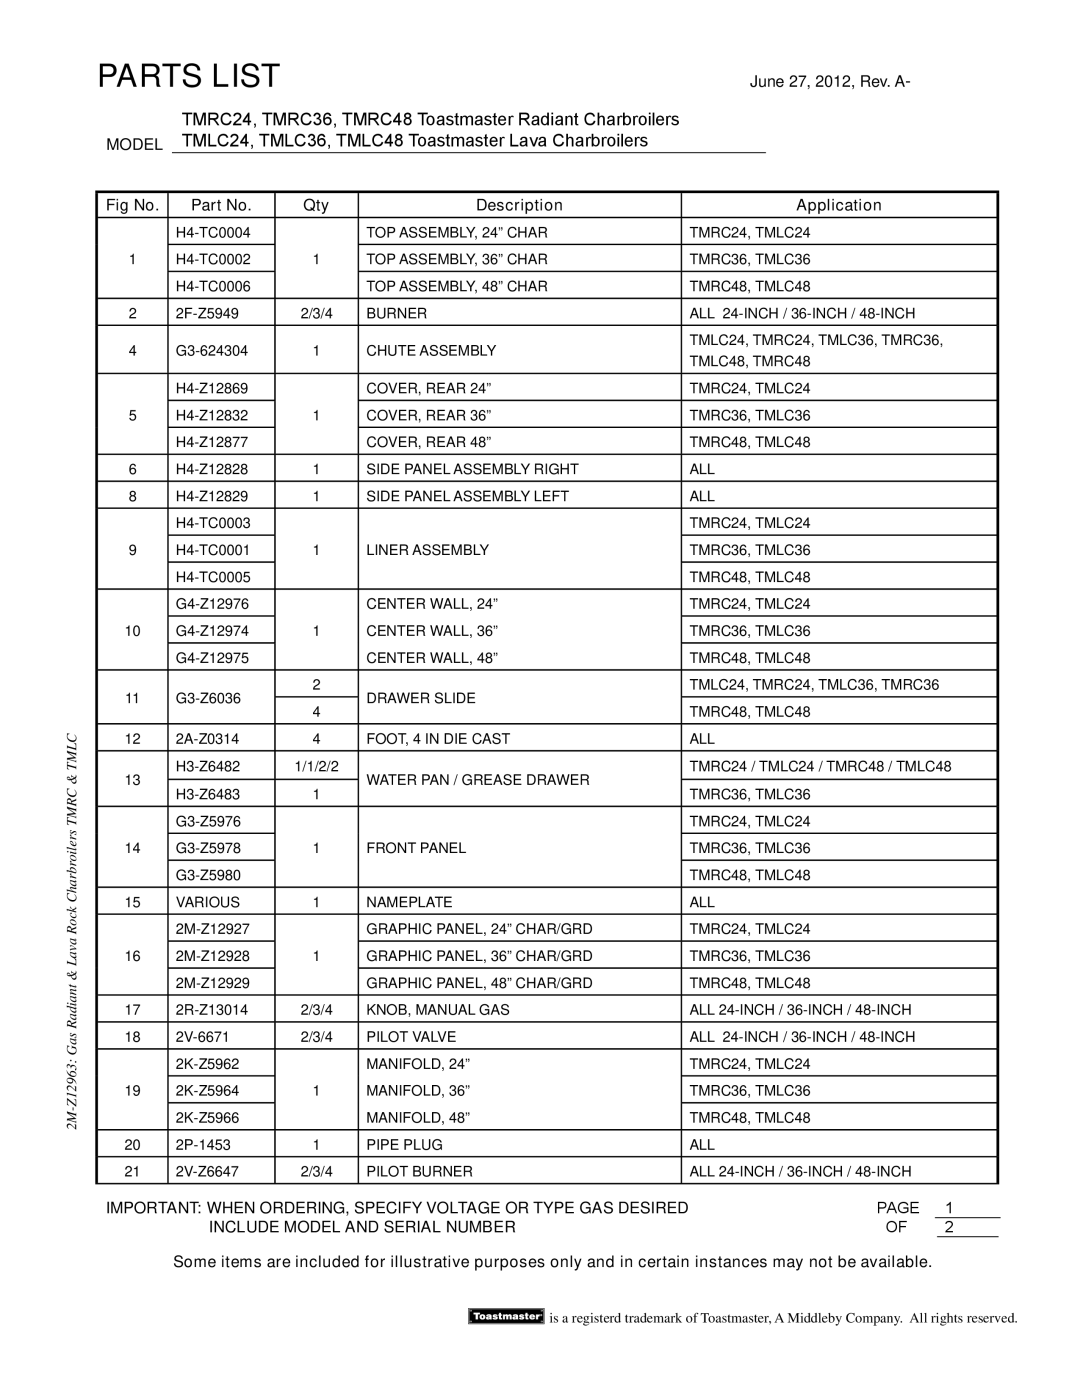 Toastmaster TMRC48, TMRC24, TMRC36 manual Parts List, Fig No, Description, Application, Include Model And Serial Number 